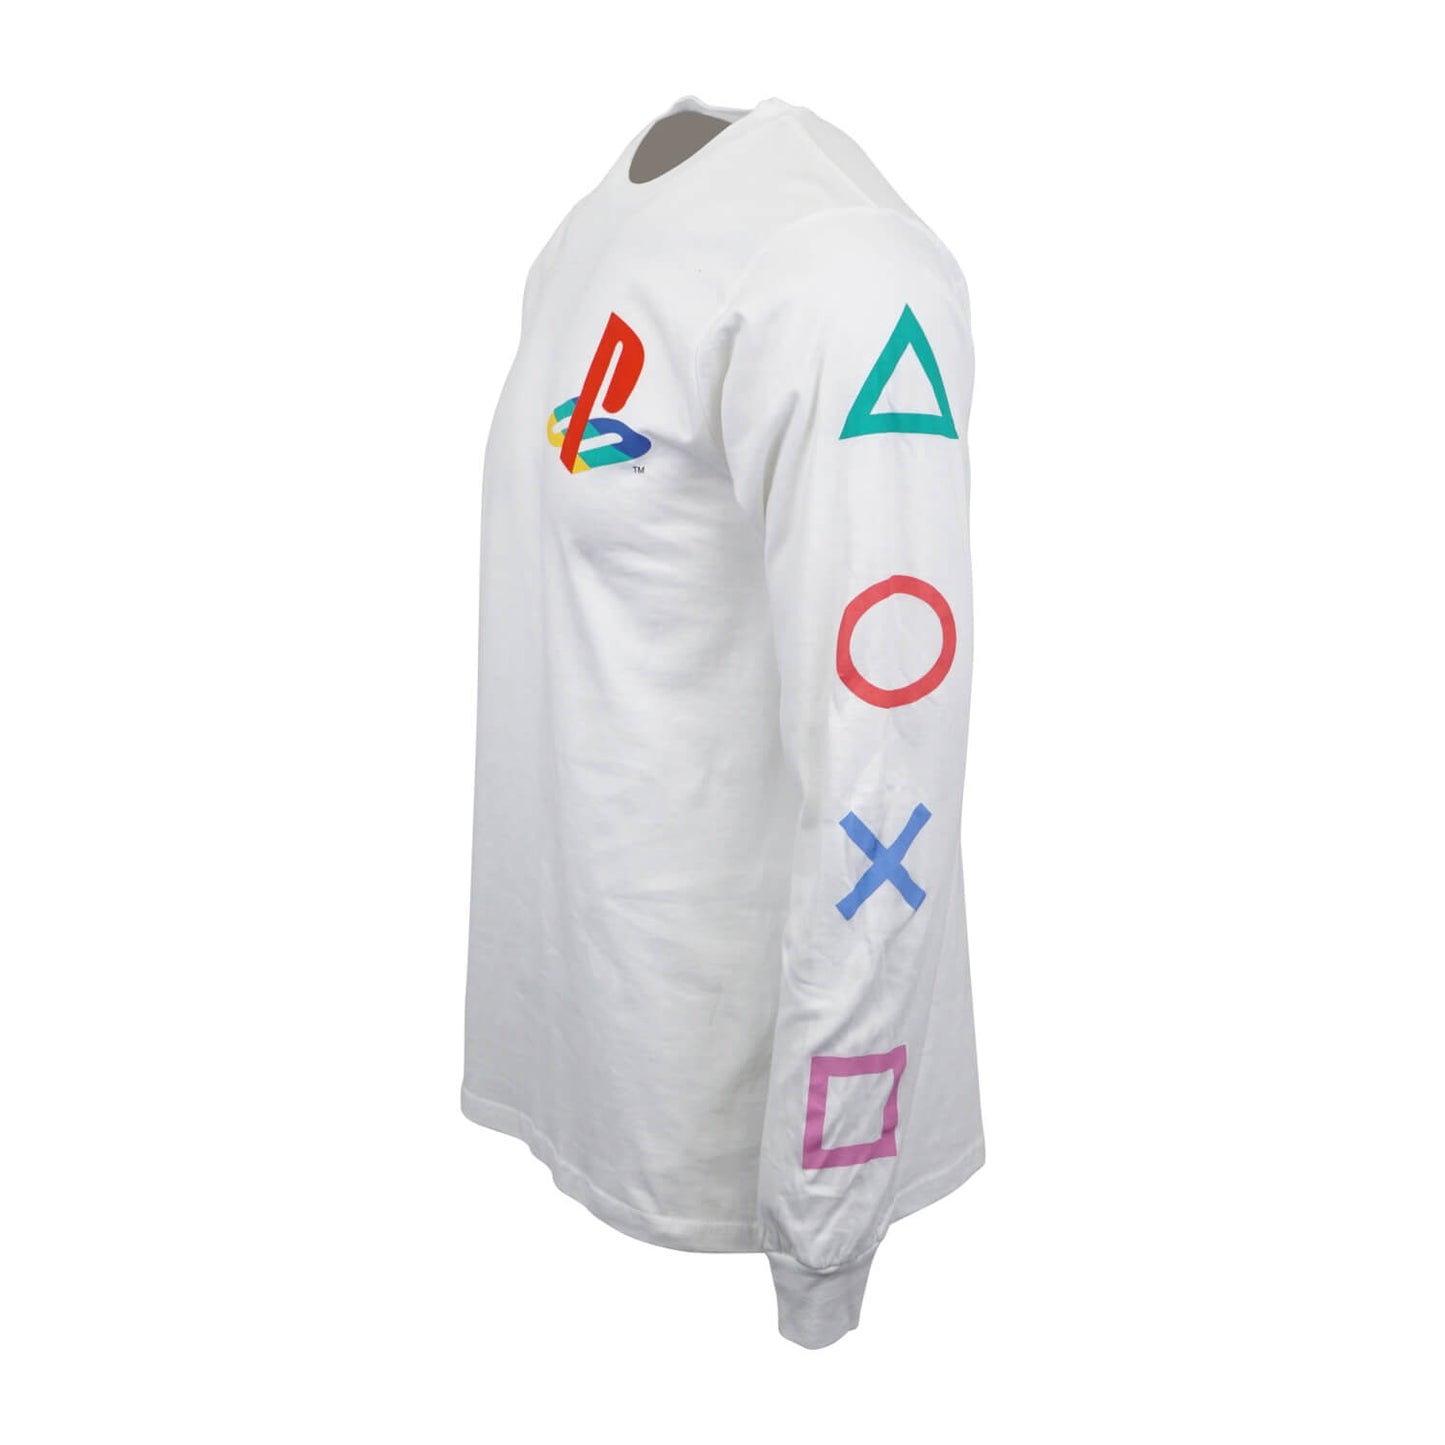 Sony Playstation Logo Button T shirt